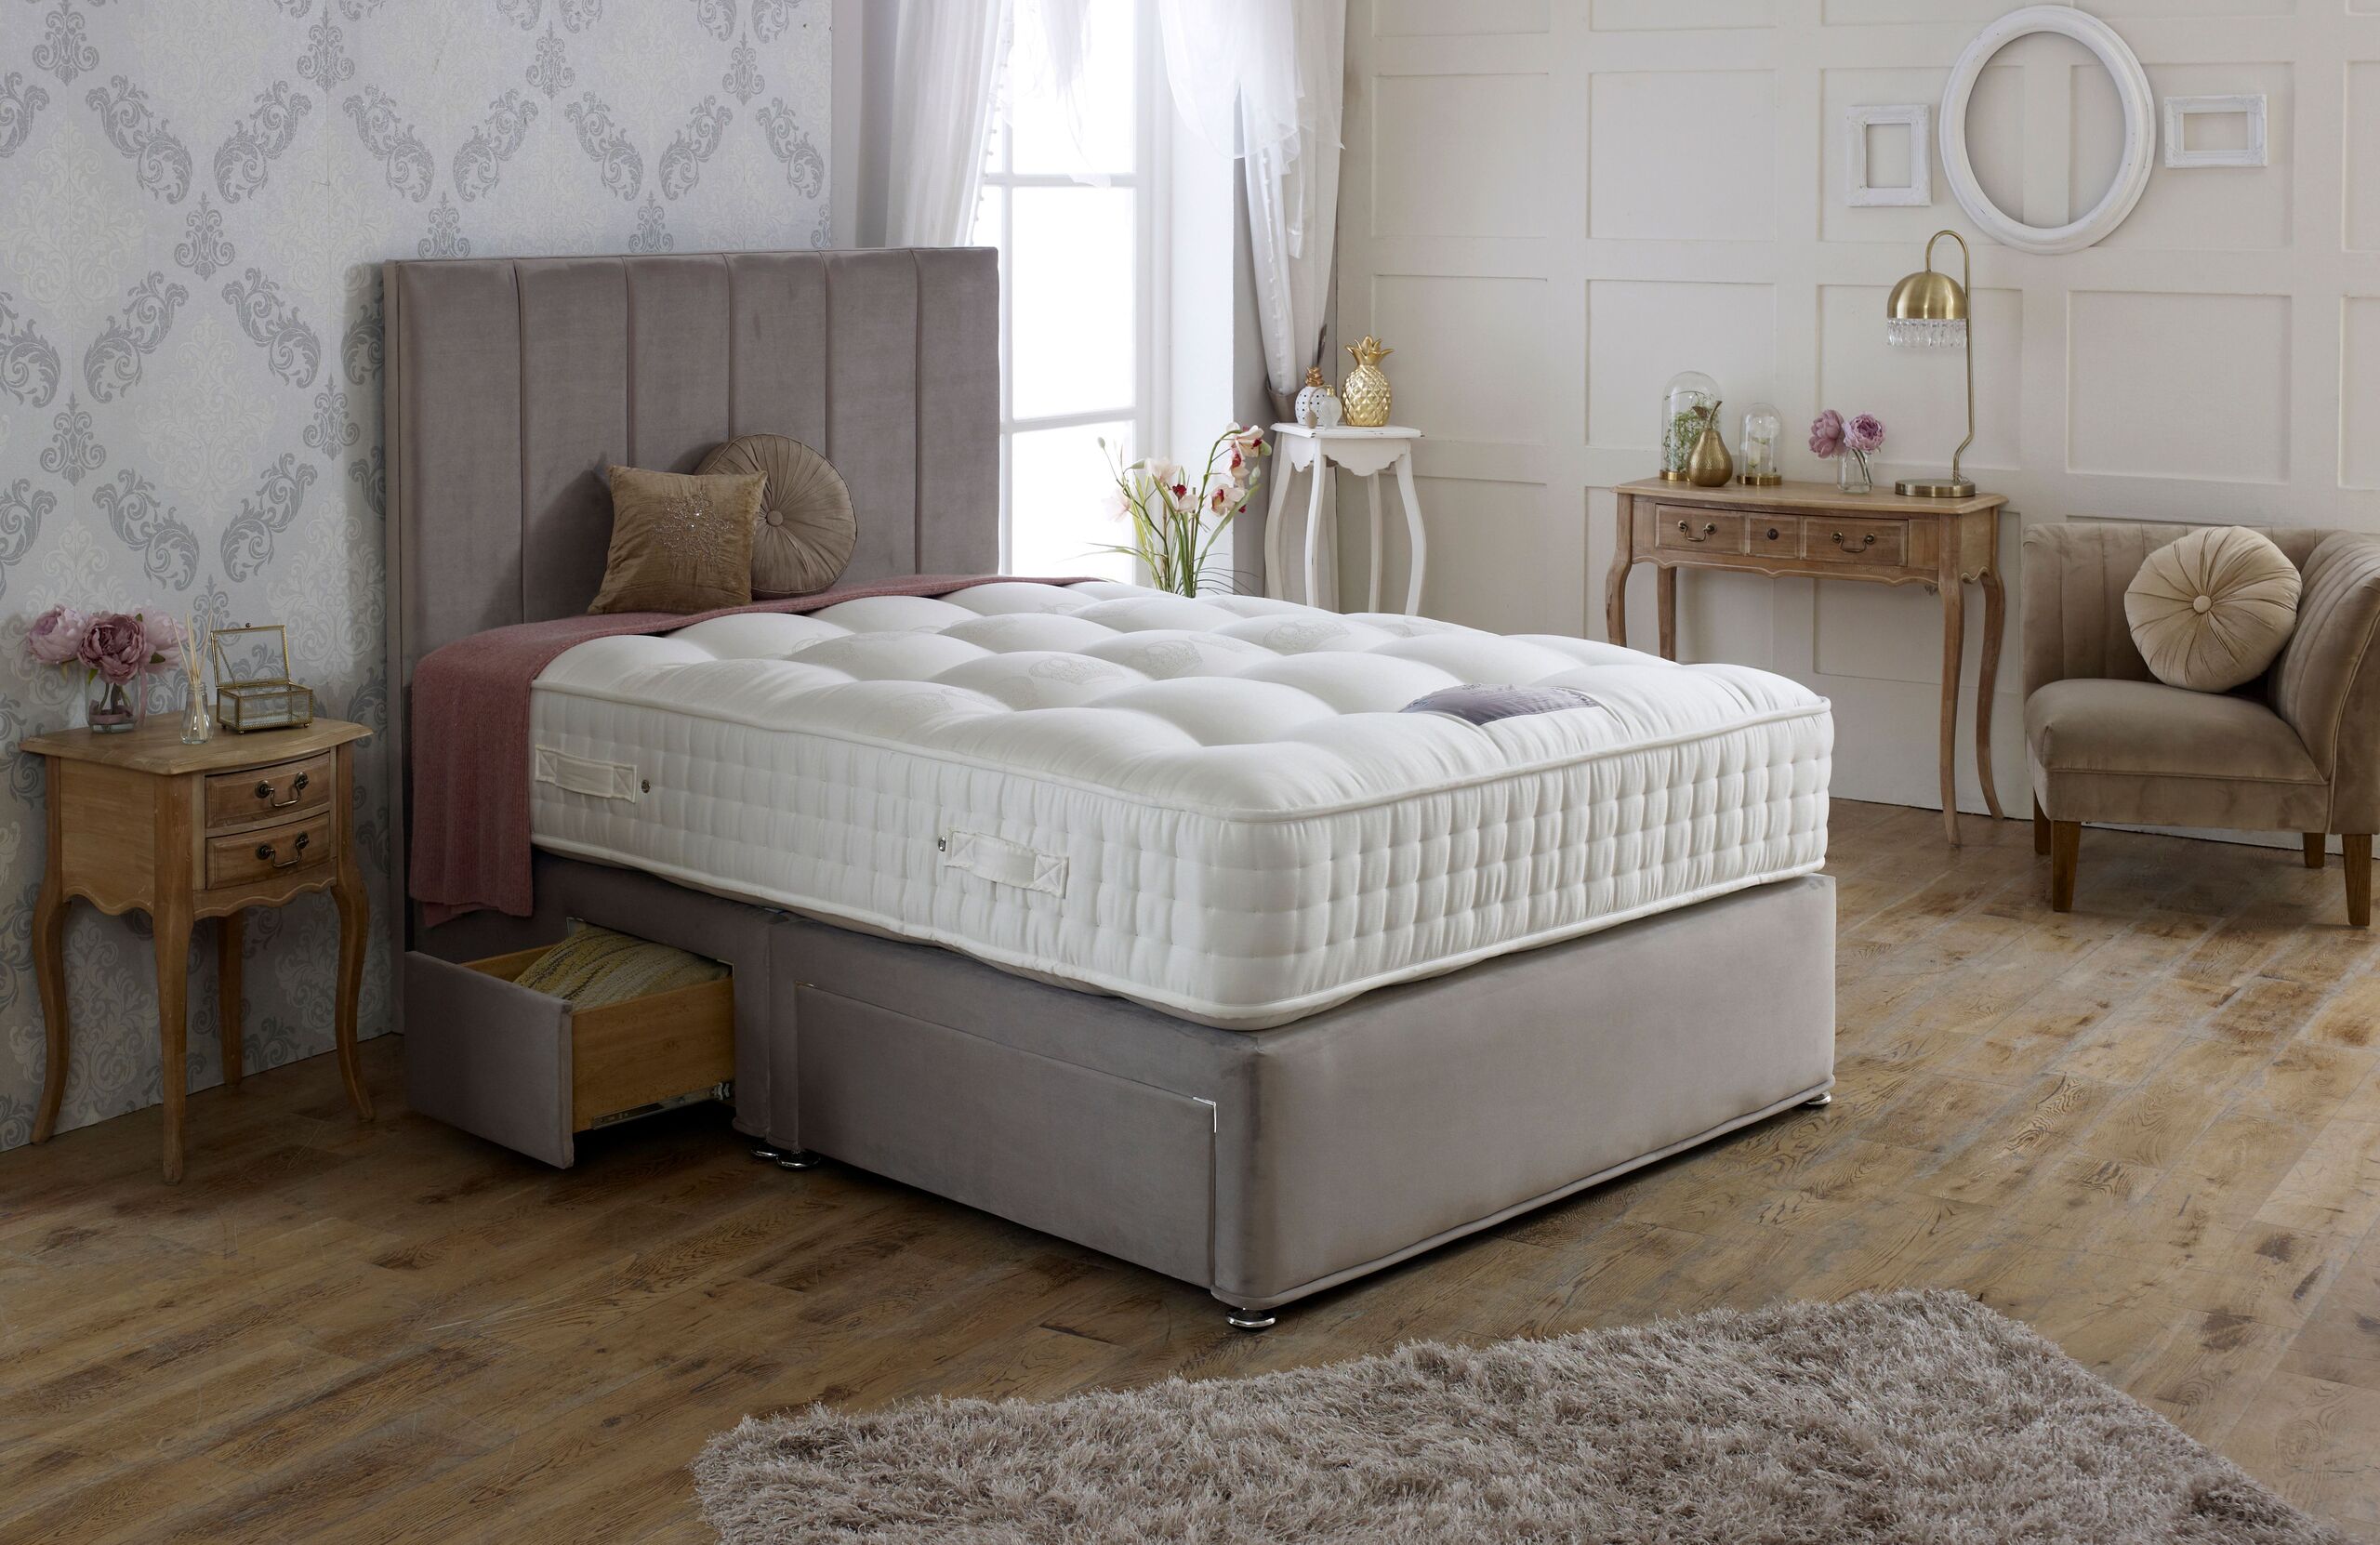 crown royal sleep in mattress